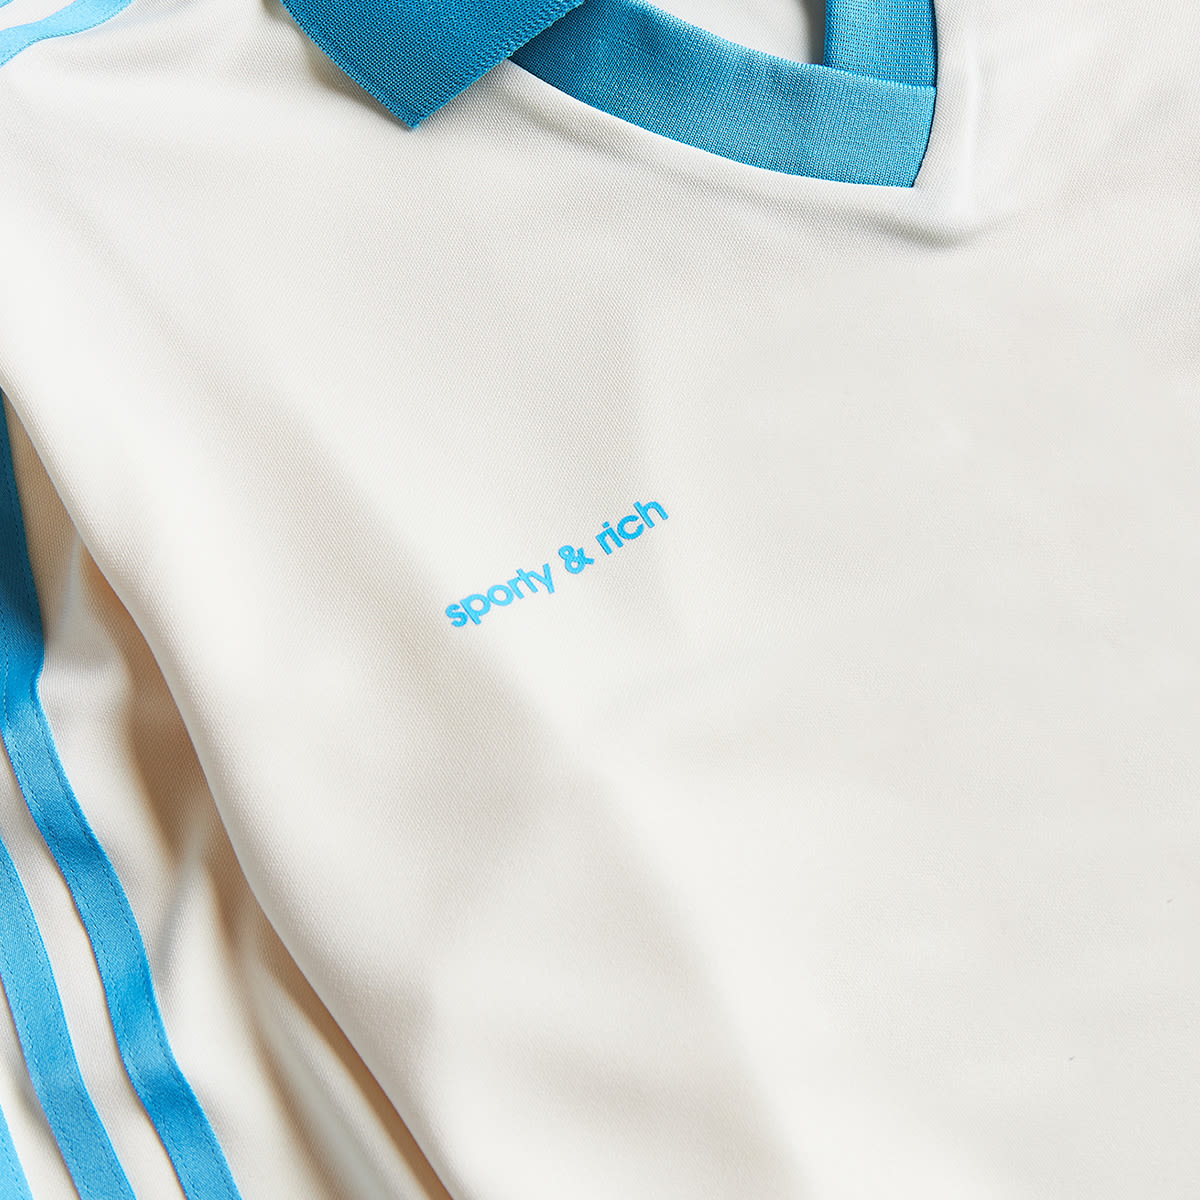 Adidas X Sporty & Rich Long Sleeve Soccer Jersey (Cream White